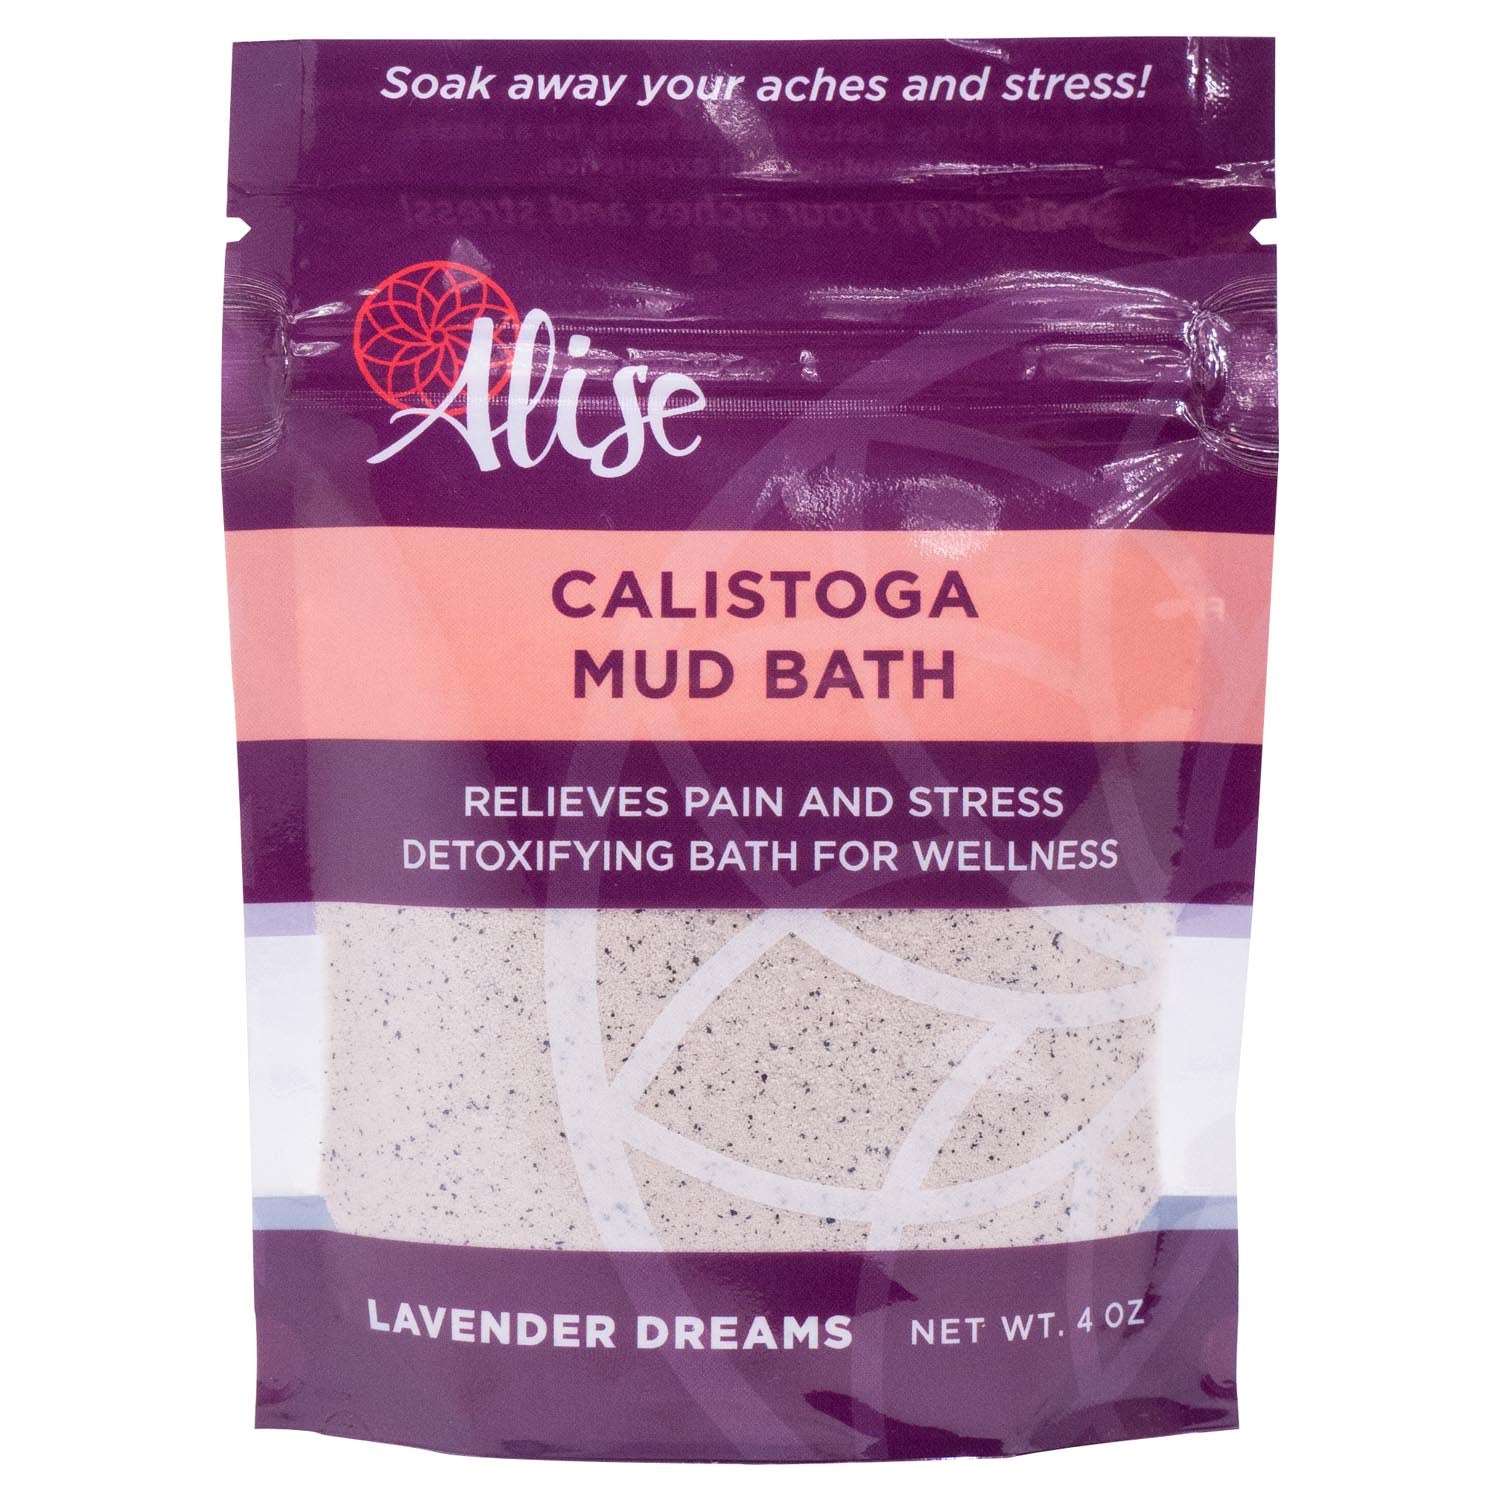 Calistoga Mud Bath Lavender Dreams 4oz handcrafted by Alise Body Care